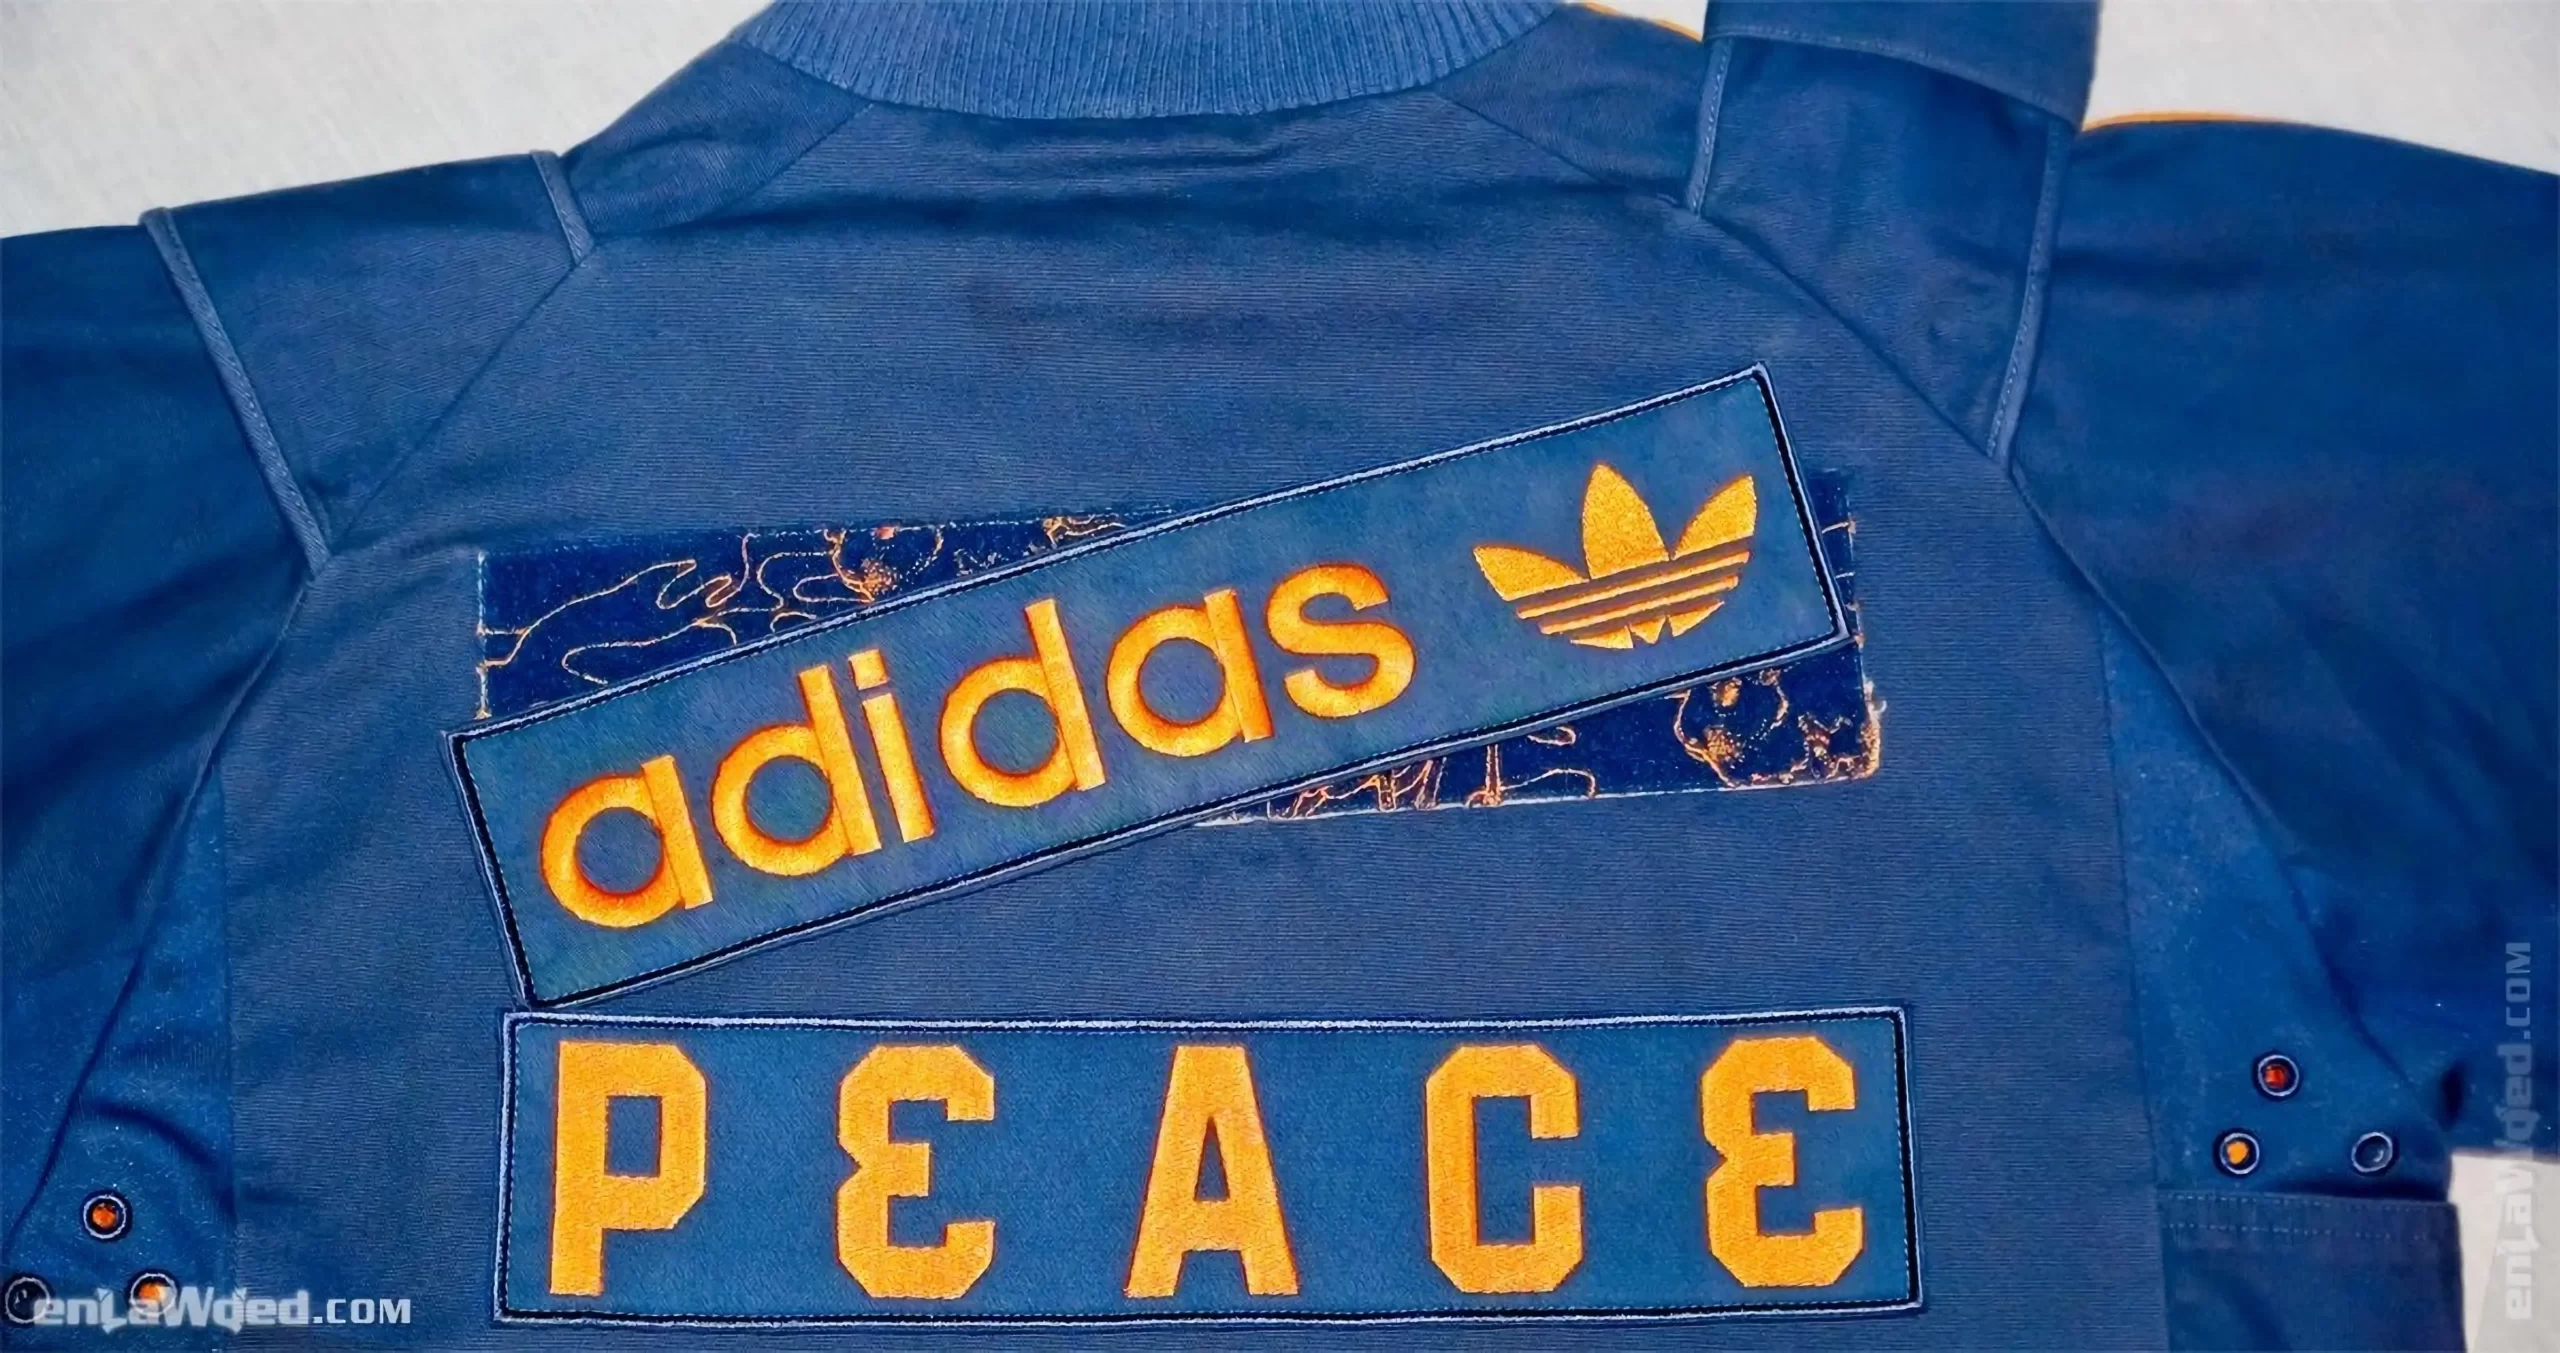 Men’s 2005 Adidas Originals Military Peace Jacket: Unstoppable (EnLawded.com file #lmchbtjobgg7cfhexch)